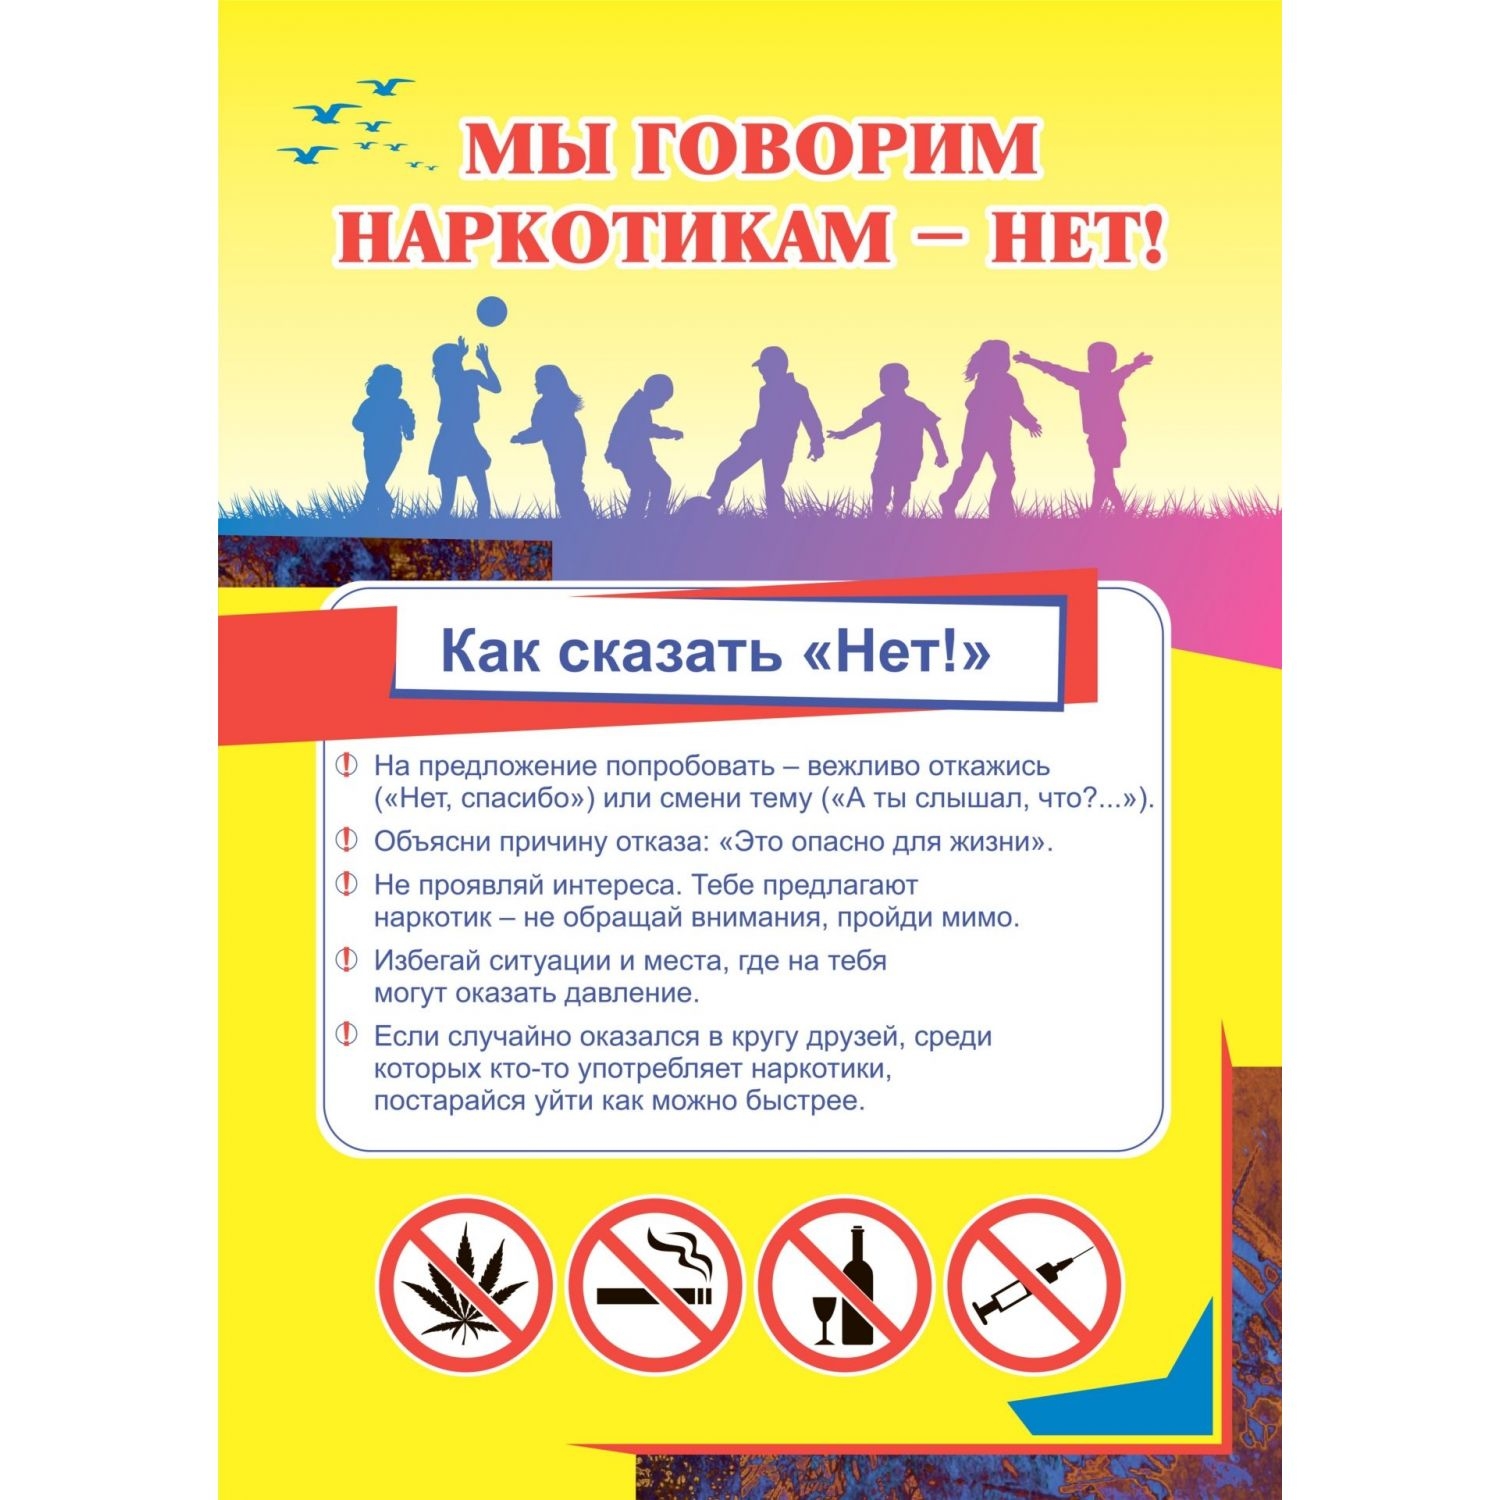 Комплект плакатов "Профилактика наркомании": 4 плаката с методическим сопровождением